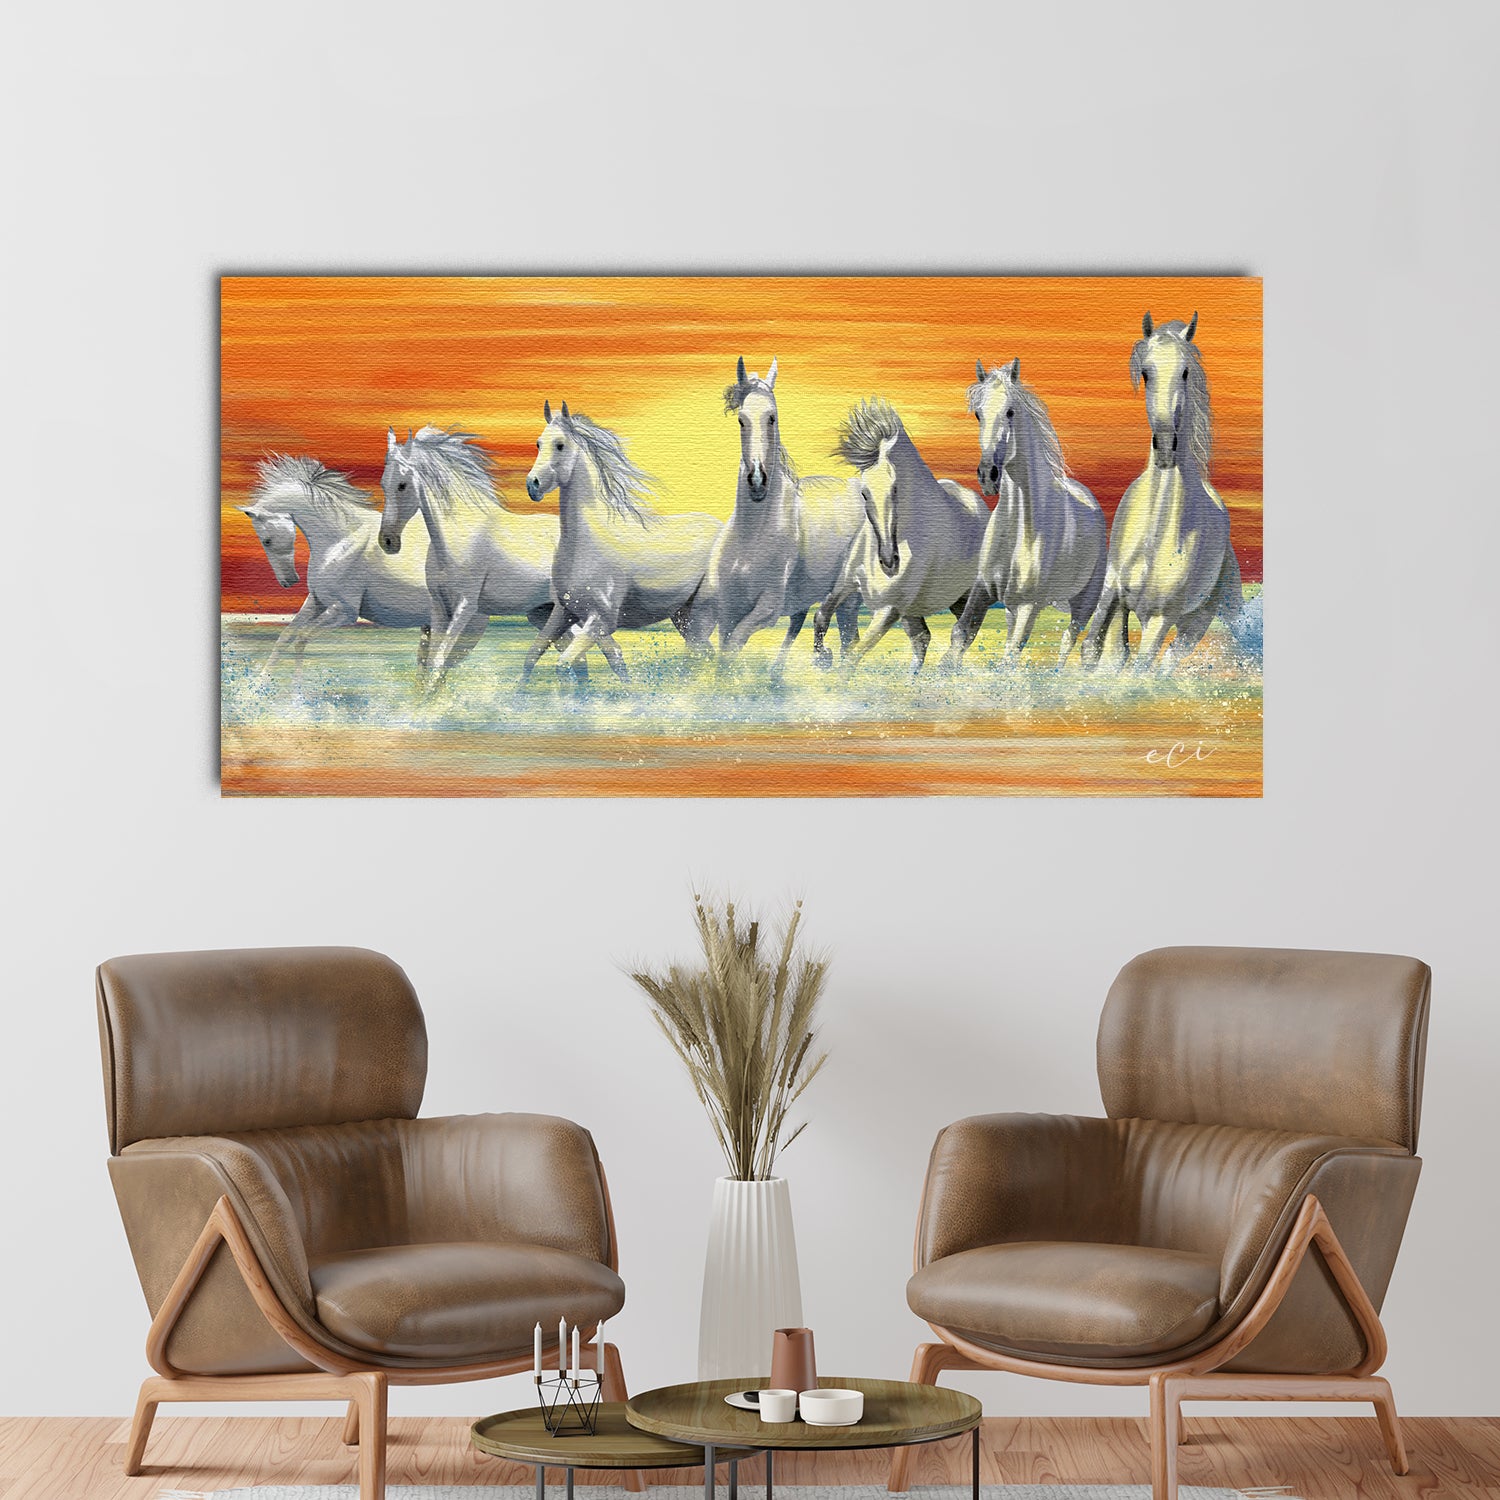 7 White Running Horses Painting Digital Printed Canvas Animal Wall Art